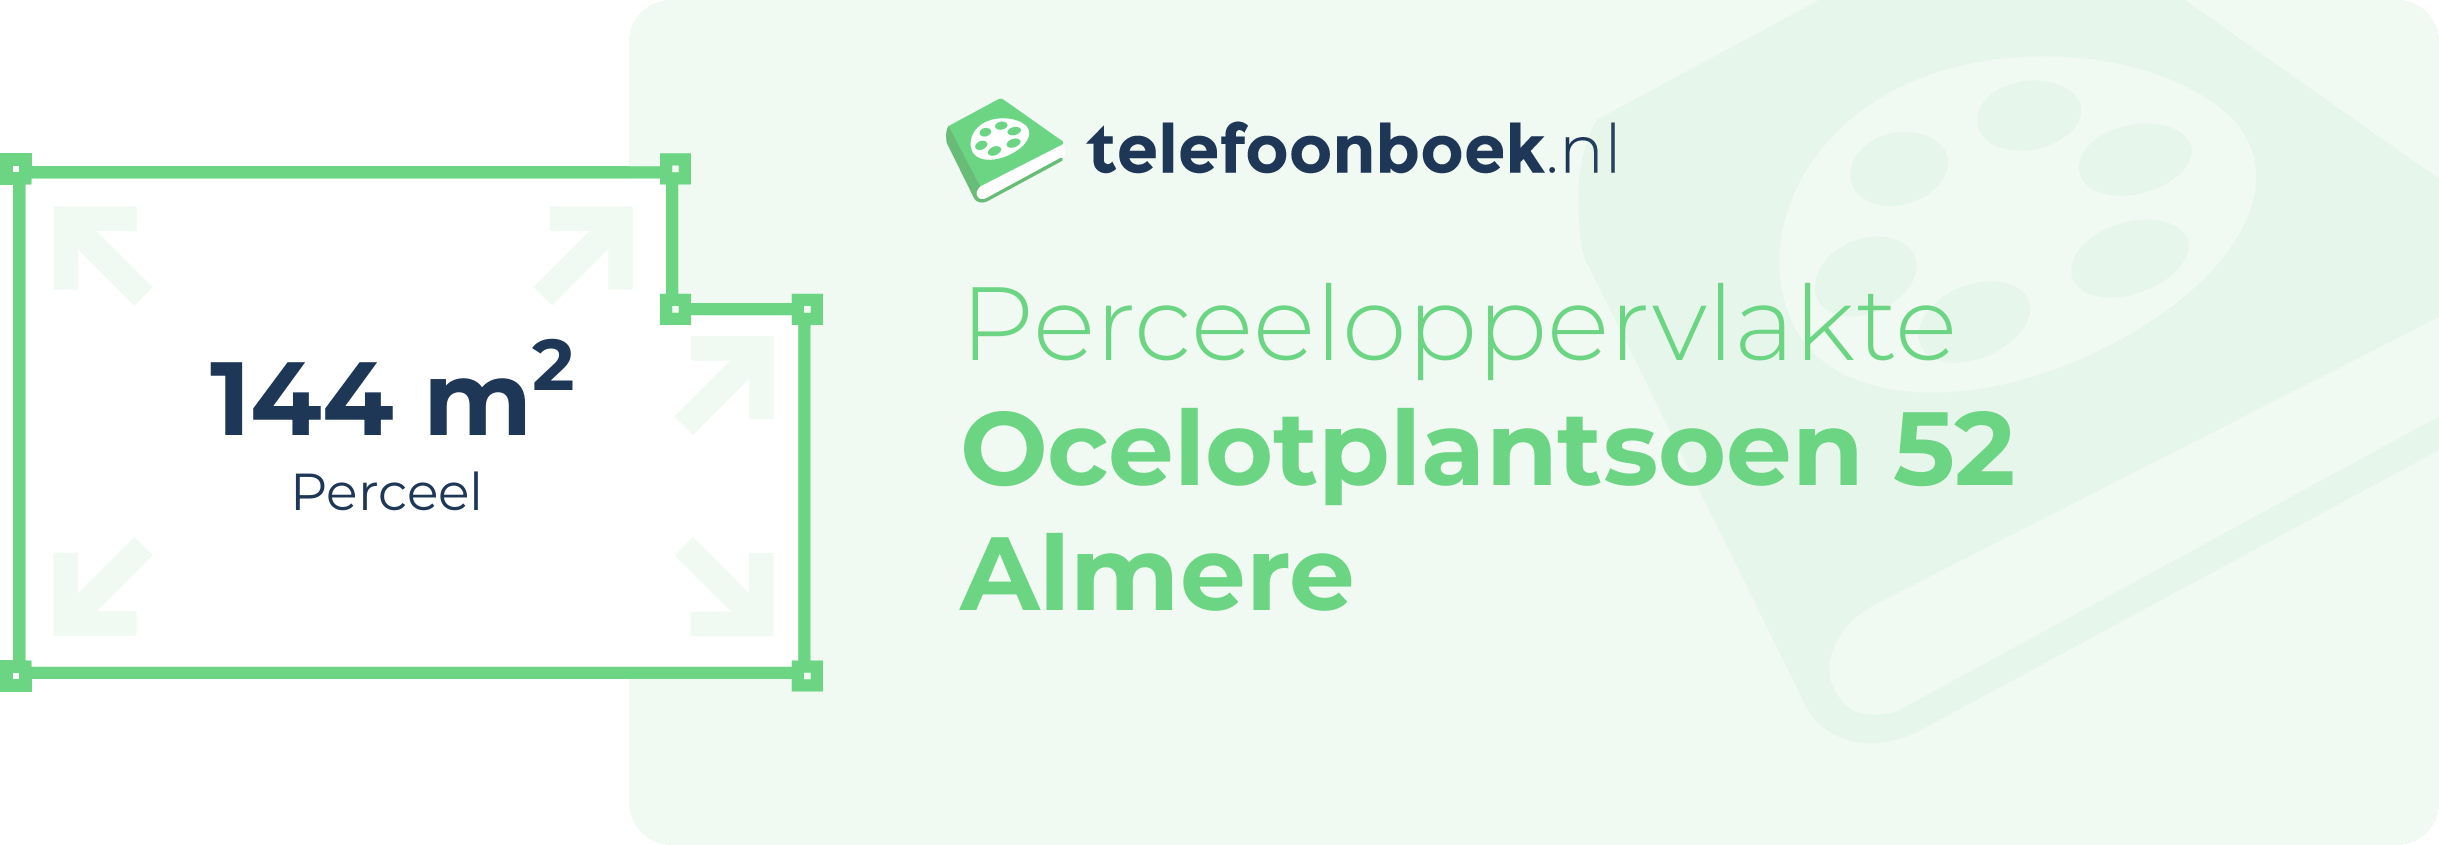 Perceeloppervlakte Ocelotplantsoen 52 Almere